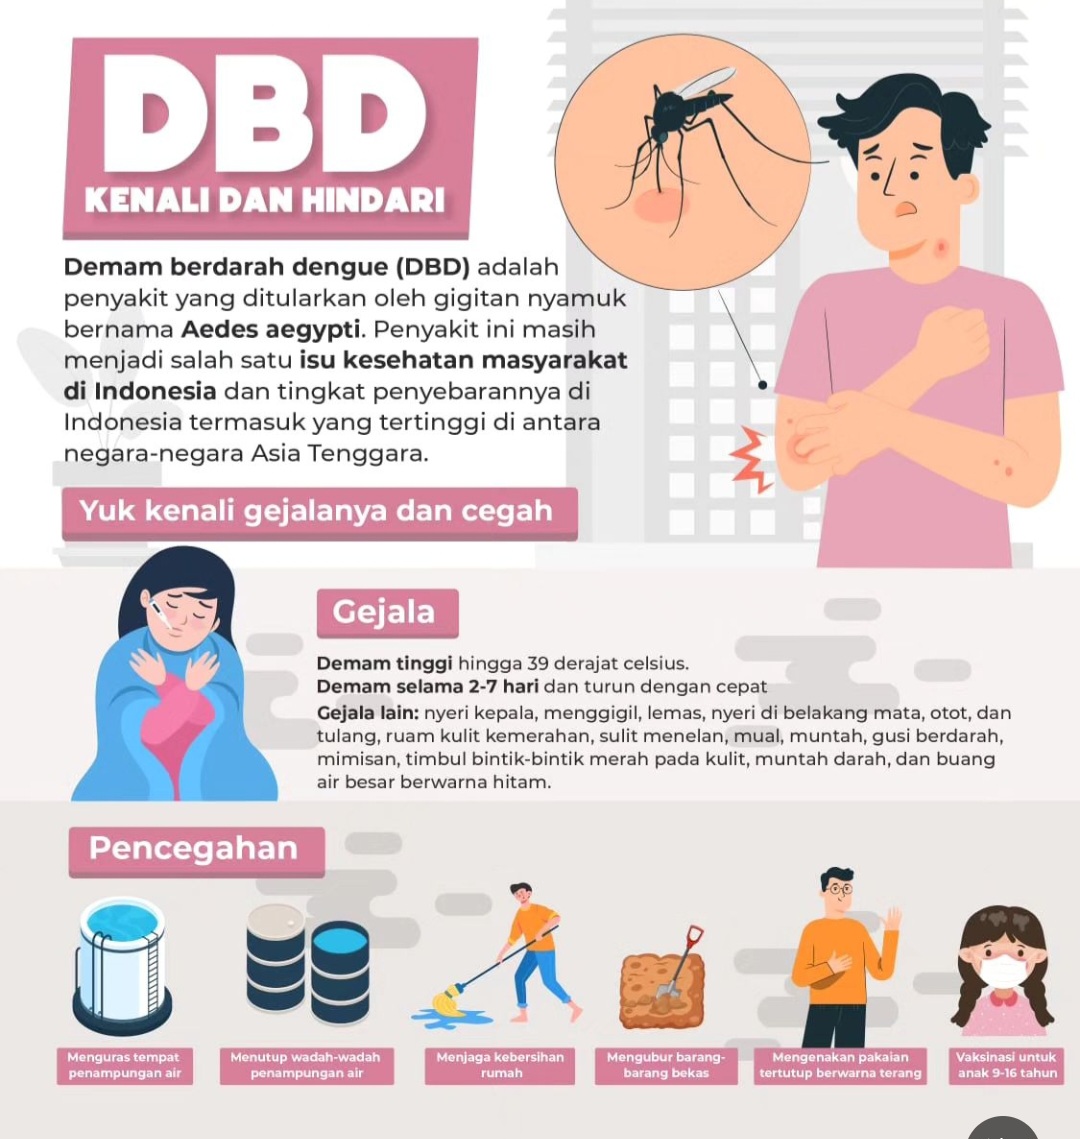 Waspada! Musim Hujan Penyakit DBD Menyerang, Ini 5 Tips Pencegahan dari Gigitan Nyamuk